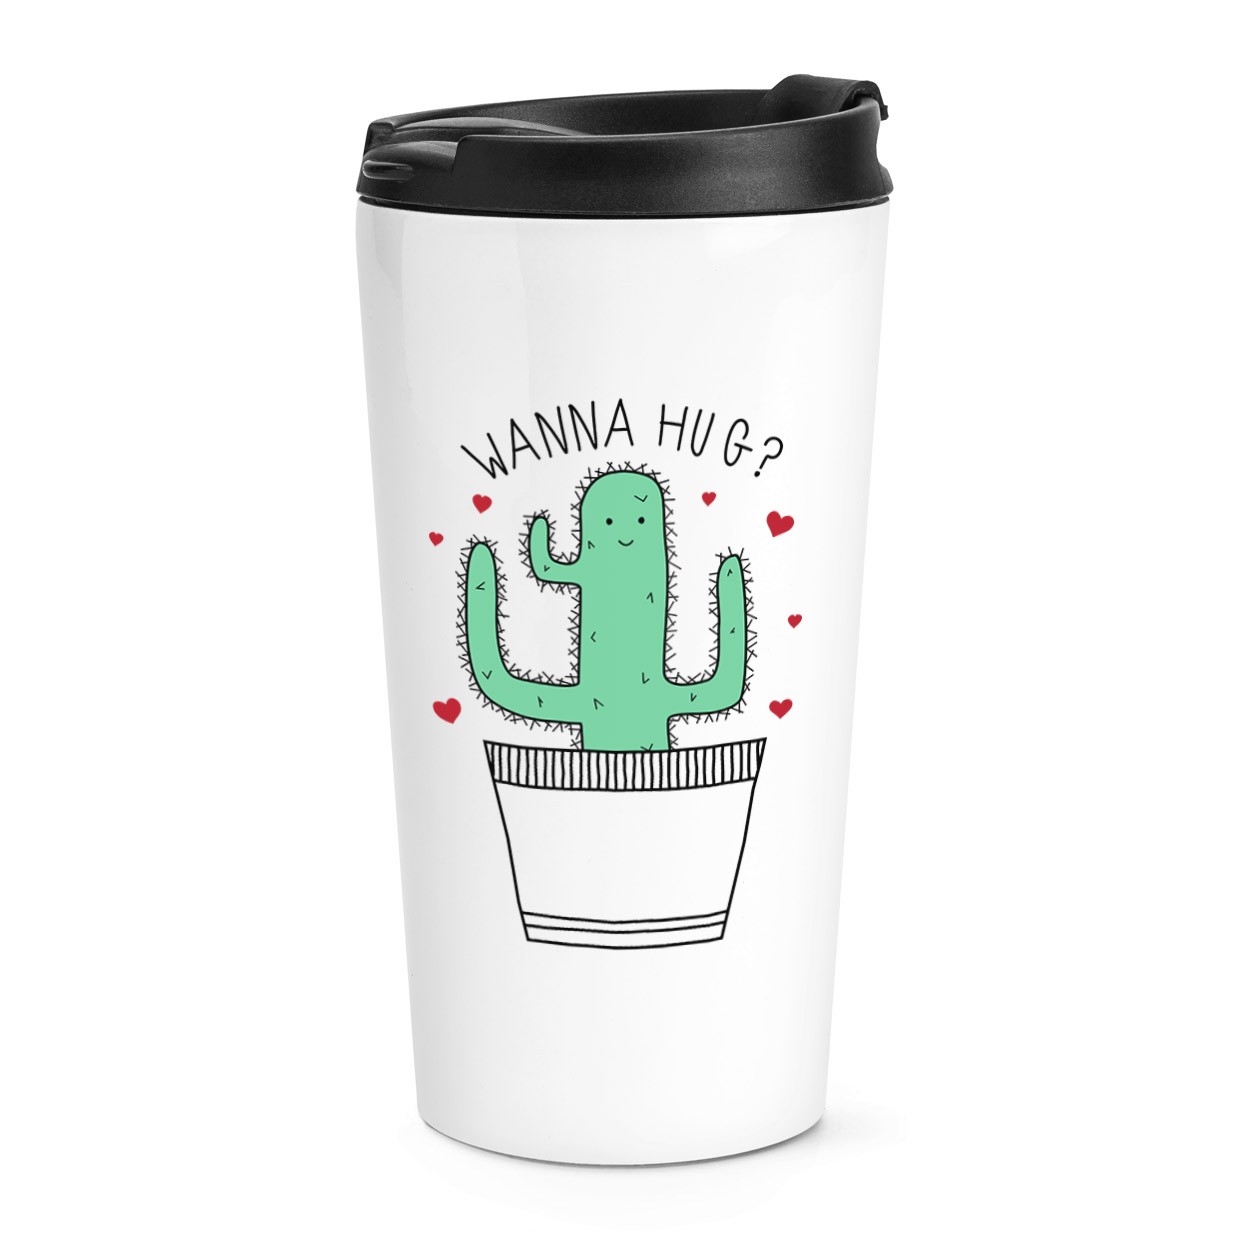 Cactus Wanna Hug Travel Mug Cup